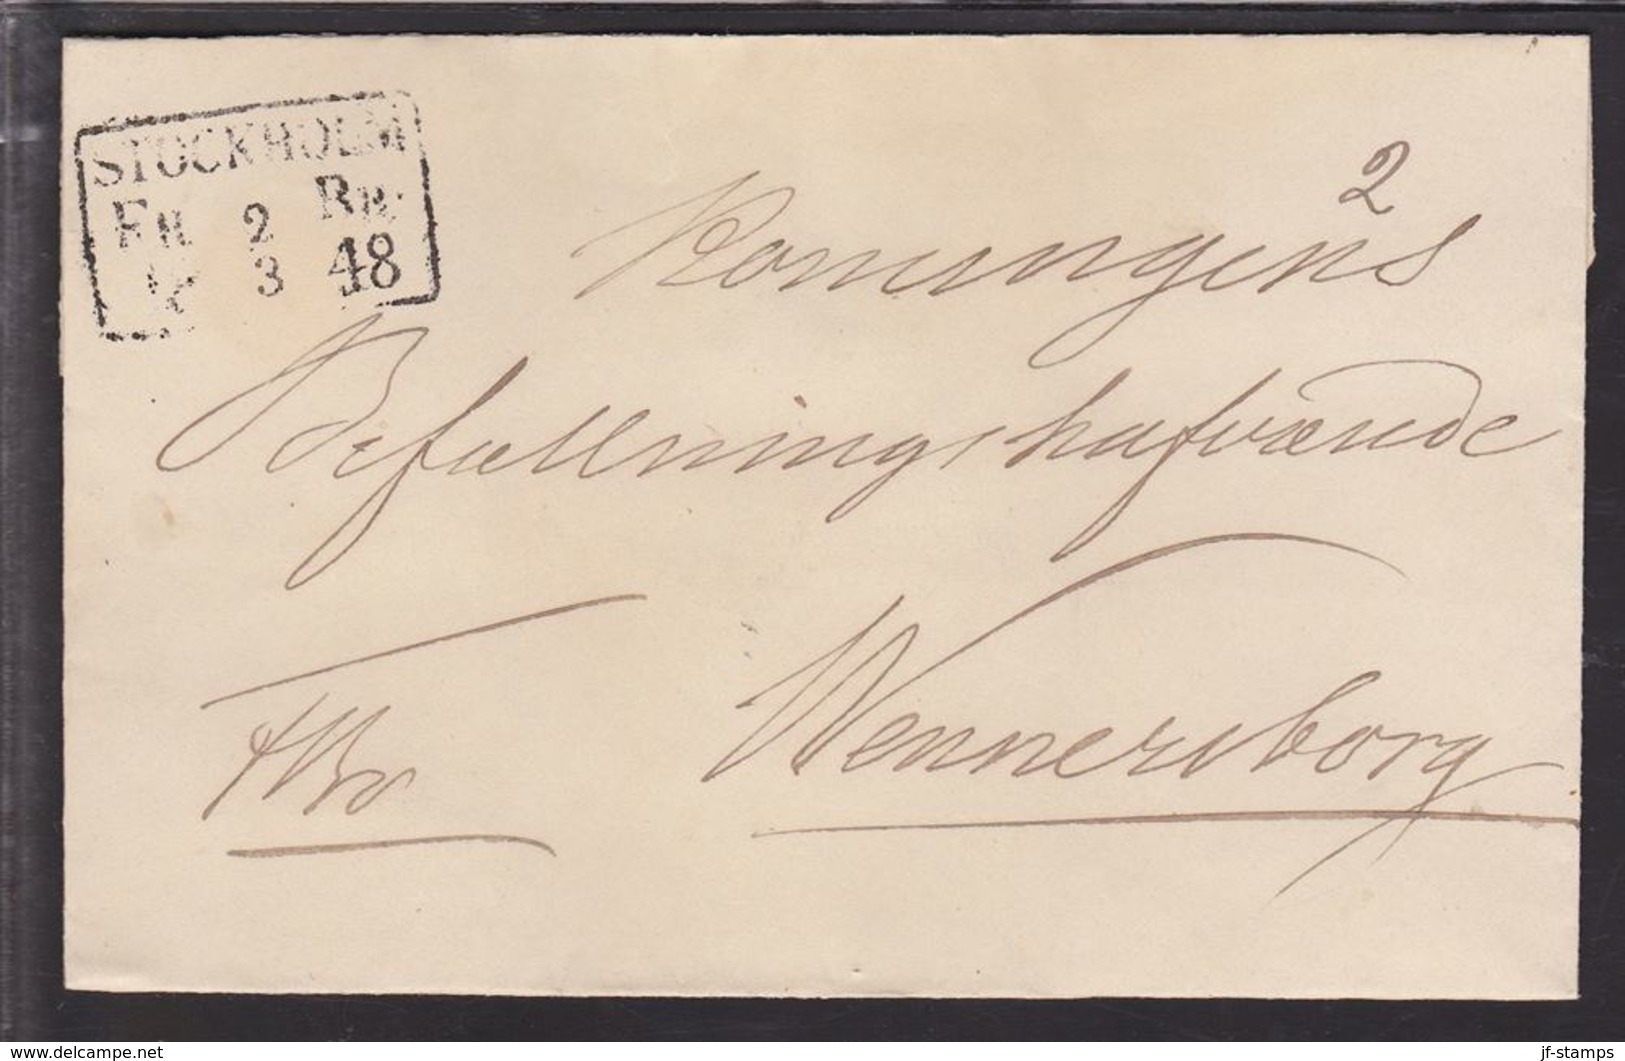 1847. SVERIGE. STOCKHOLM  FR BR 2 3 1848. To Wenersborg. () - JF111043 - Prefilatelia